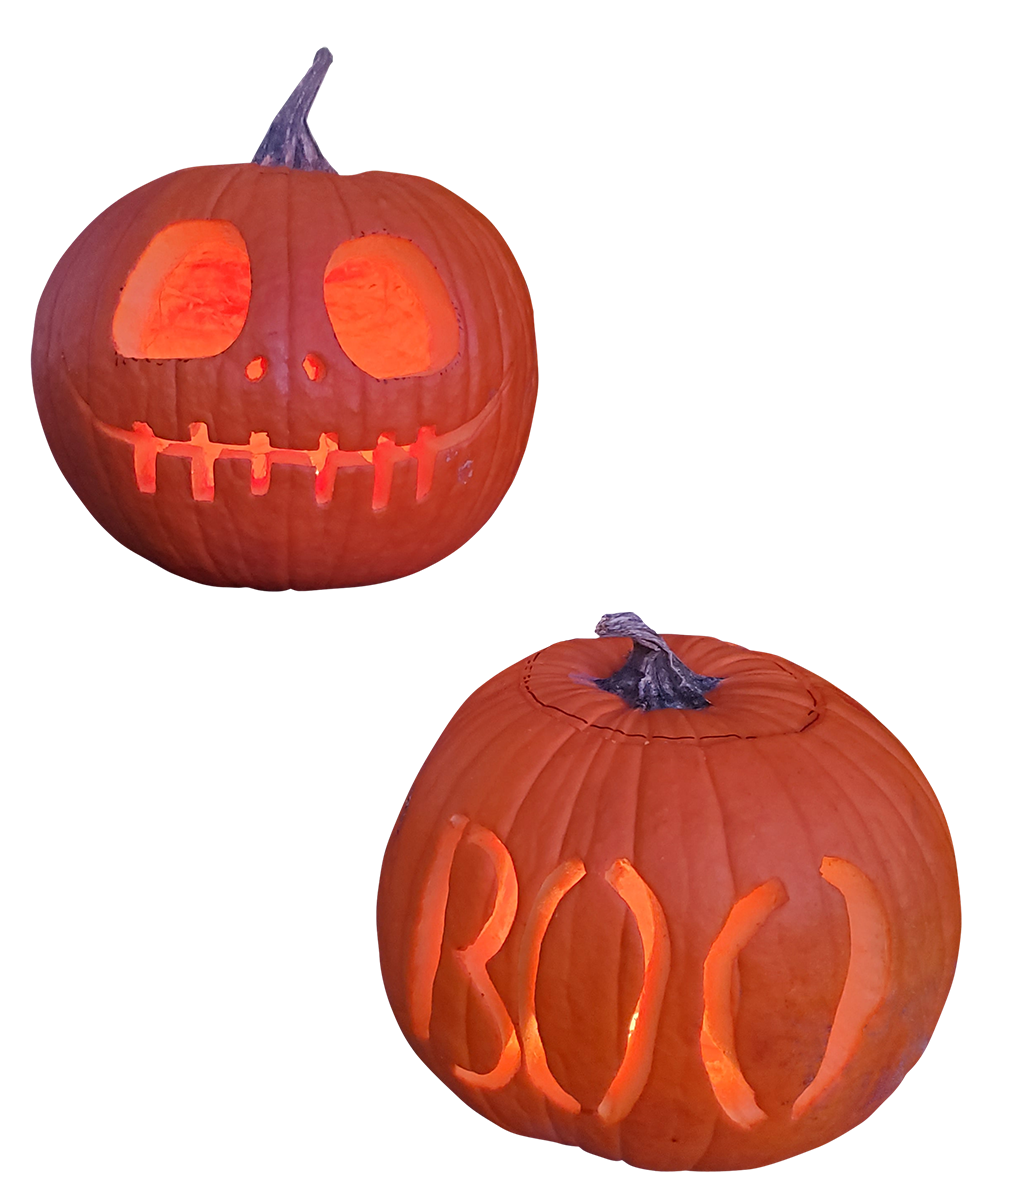 creative pumpkin PNG image, transparent Halloween creative pumpkin png image, pumpkin png hd images download